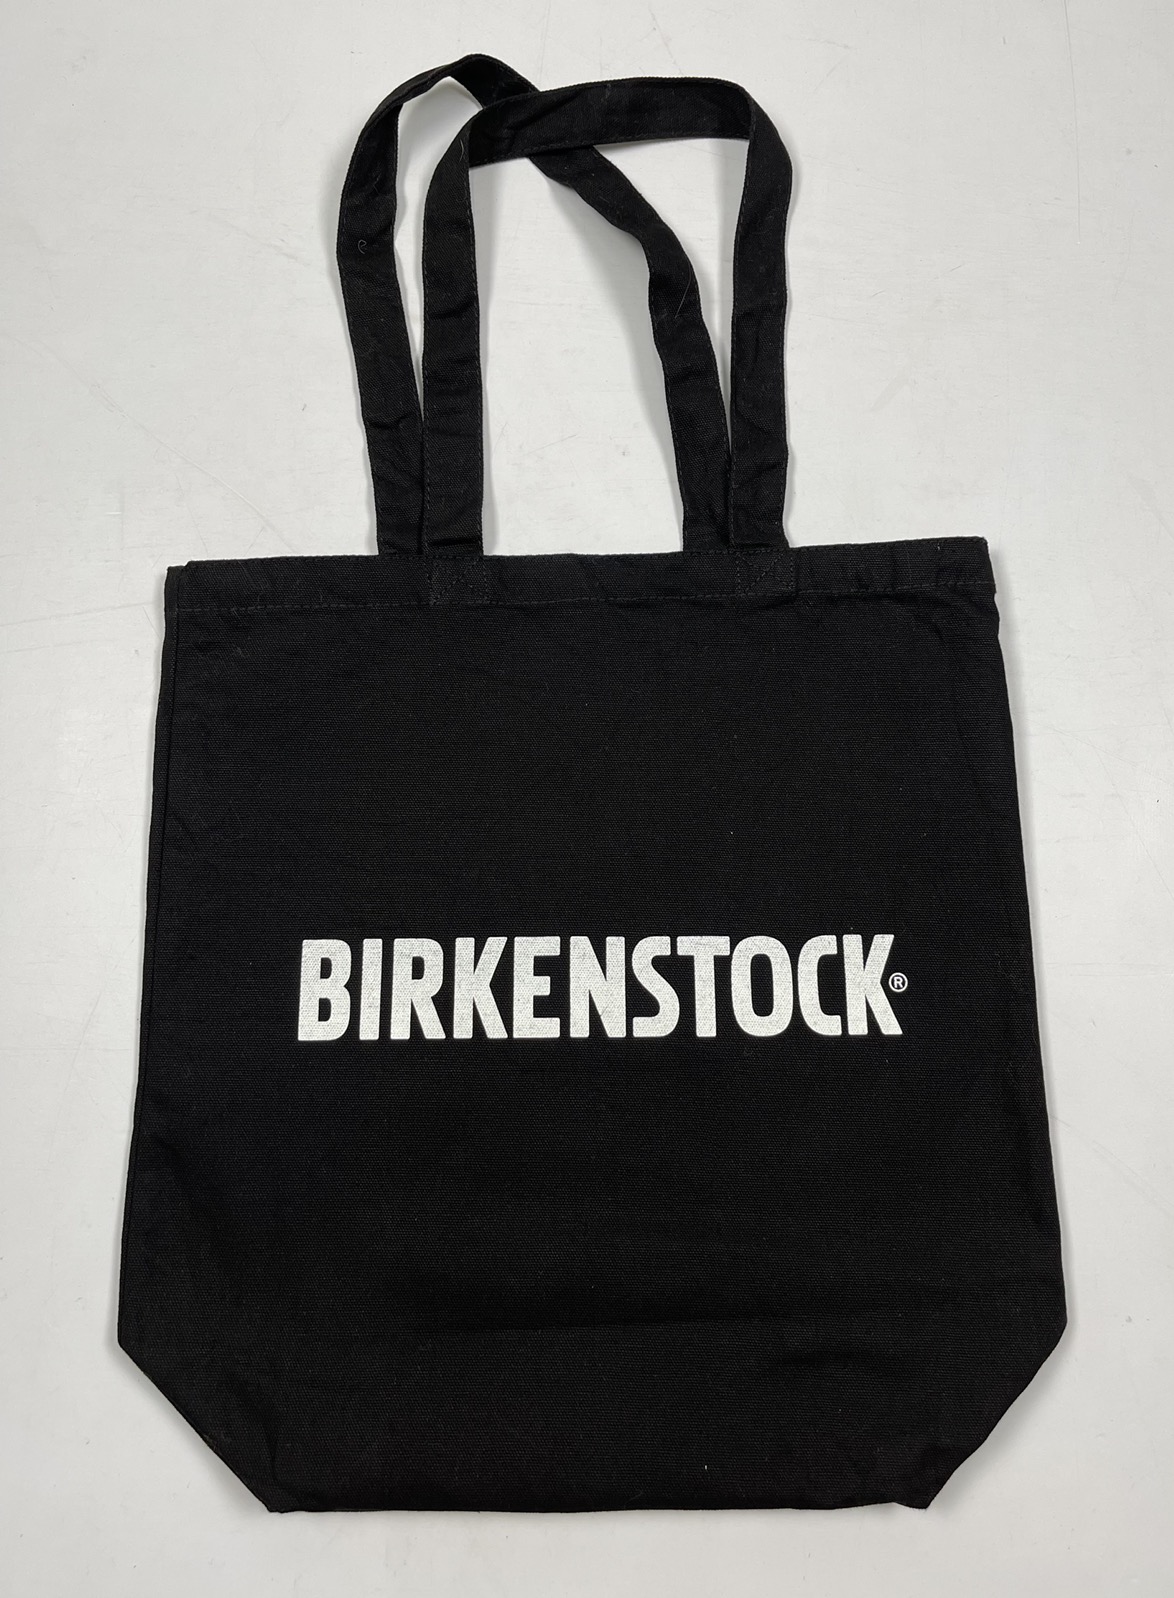 birkenstock tote bag t2 - 2